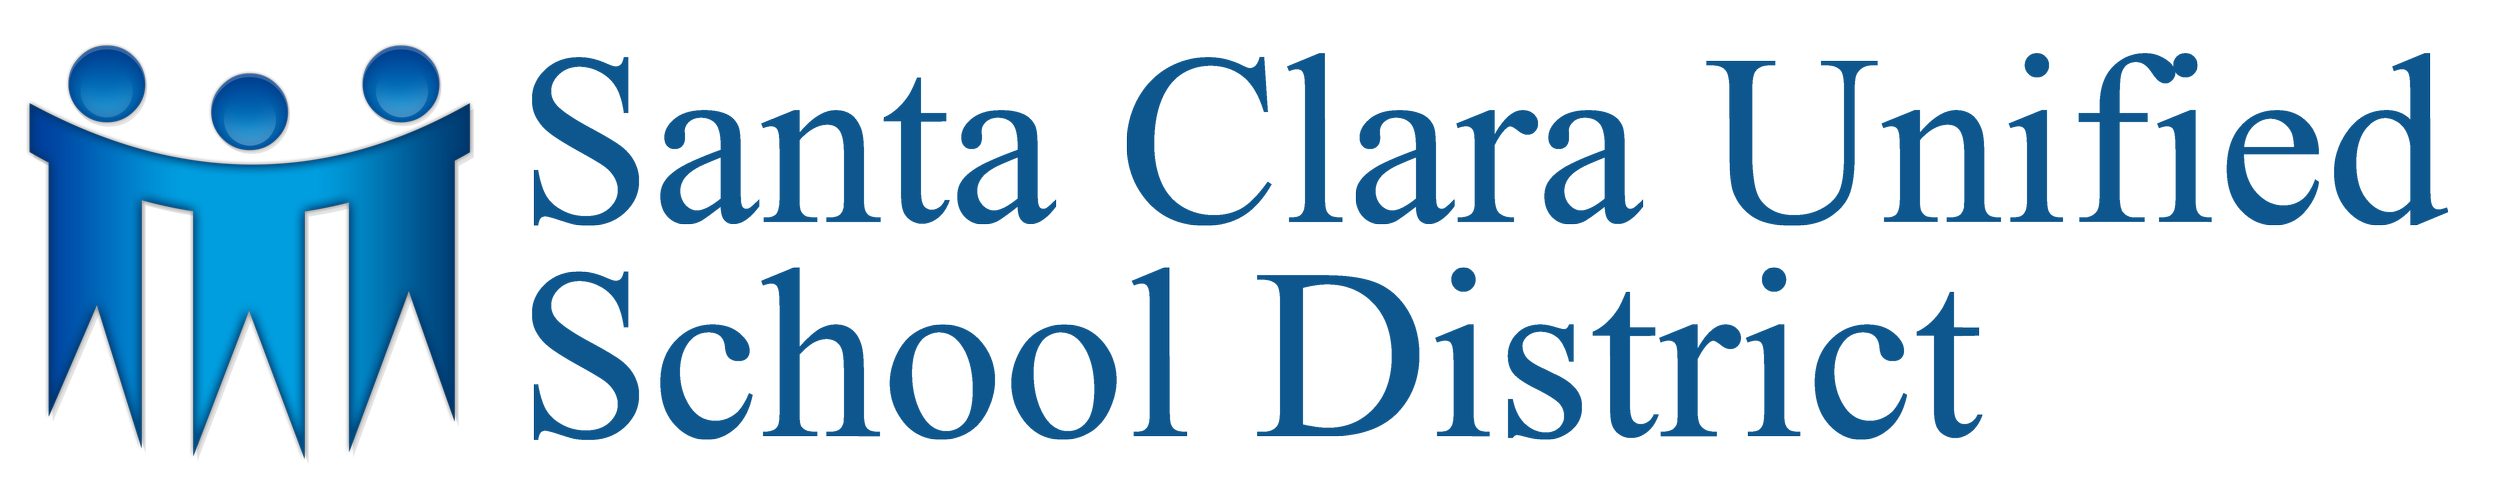 Santa Clara Unified School District.png